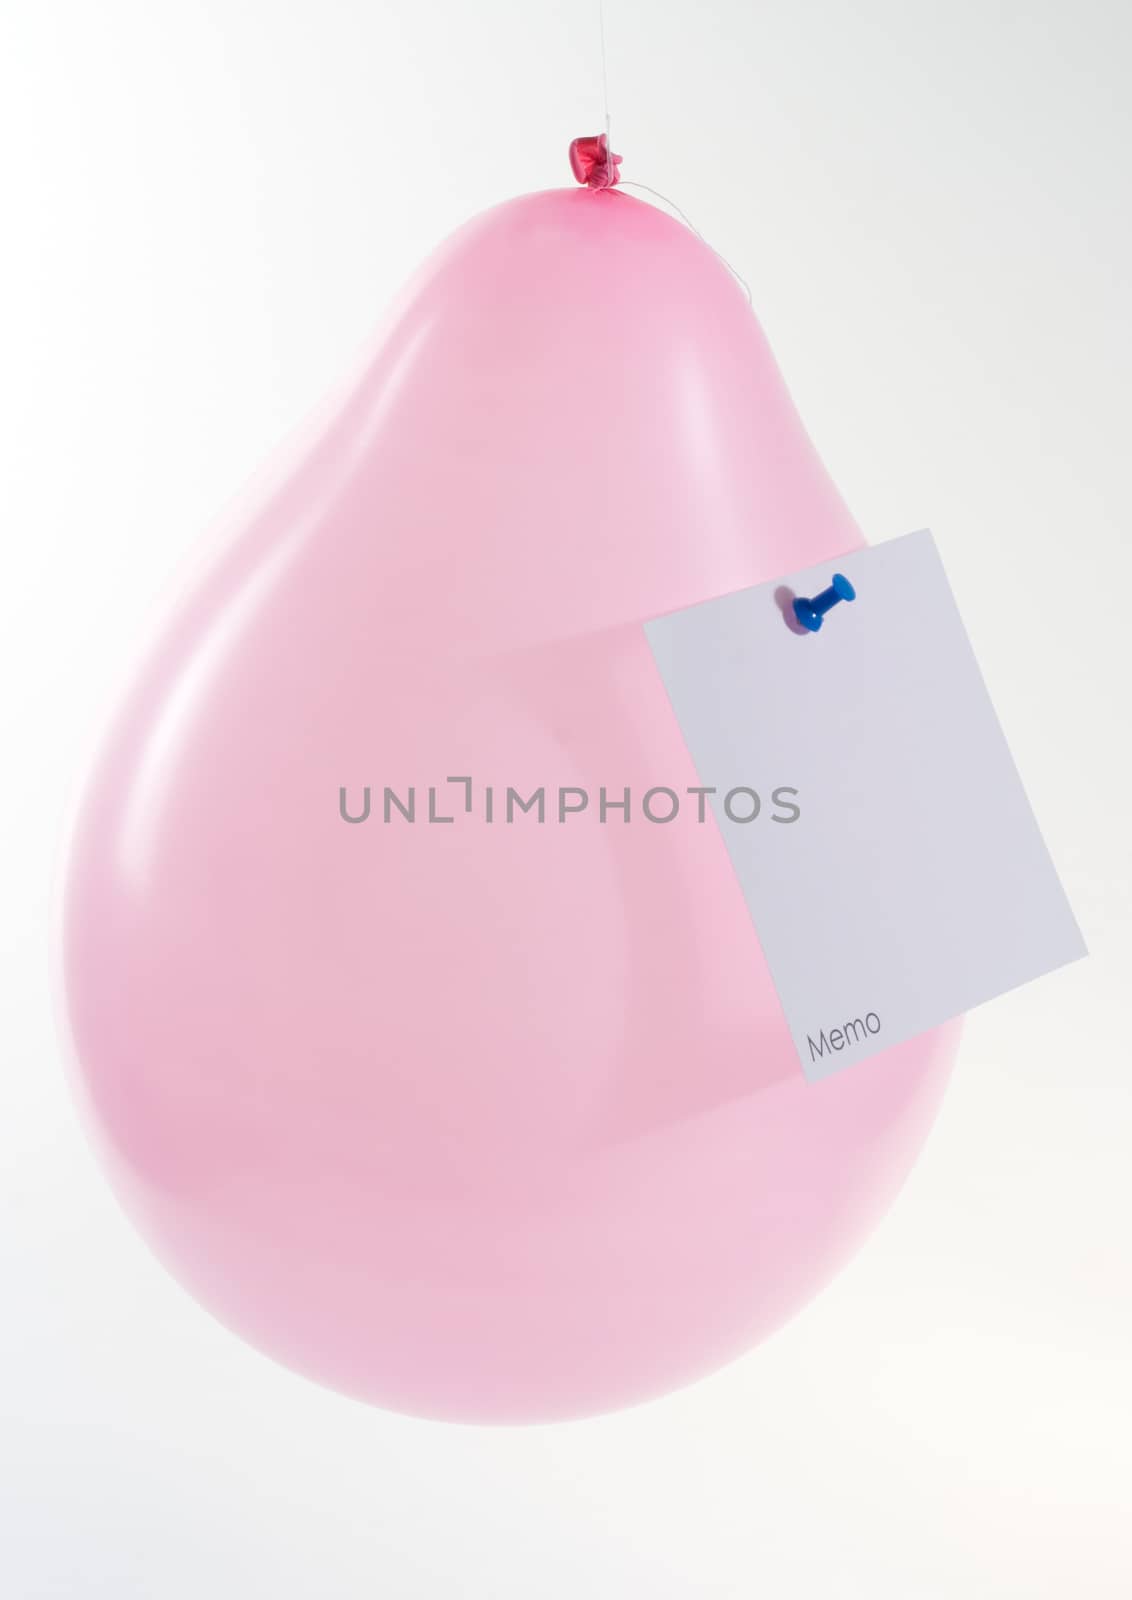 memo baloon by orcearo